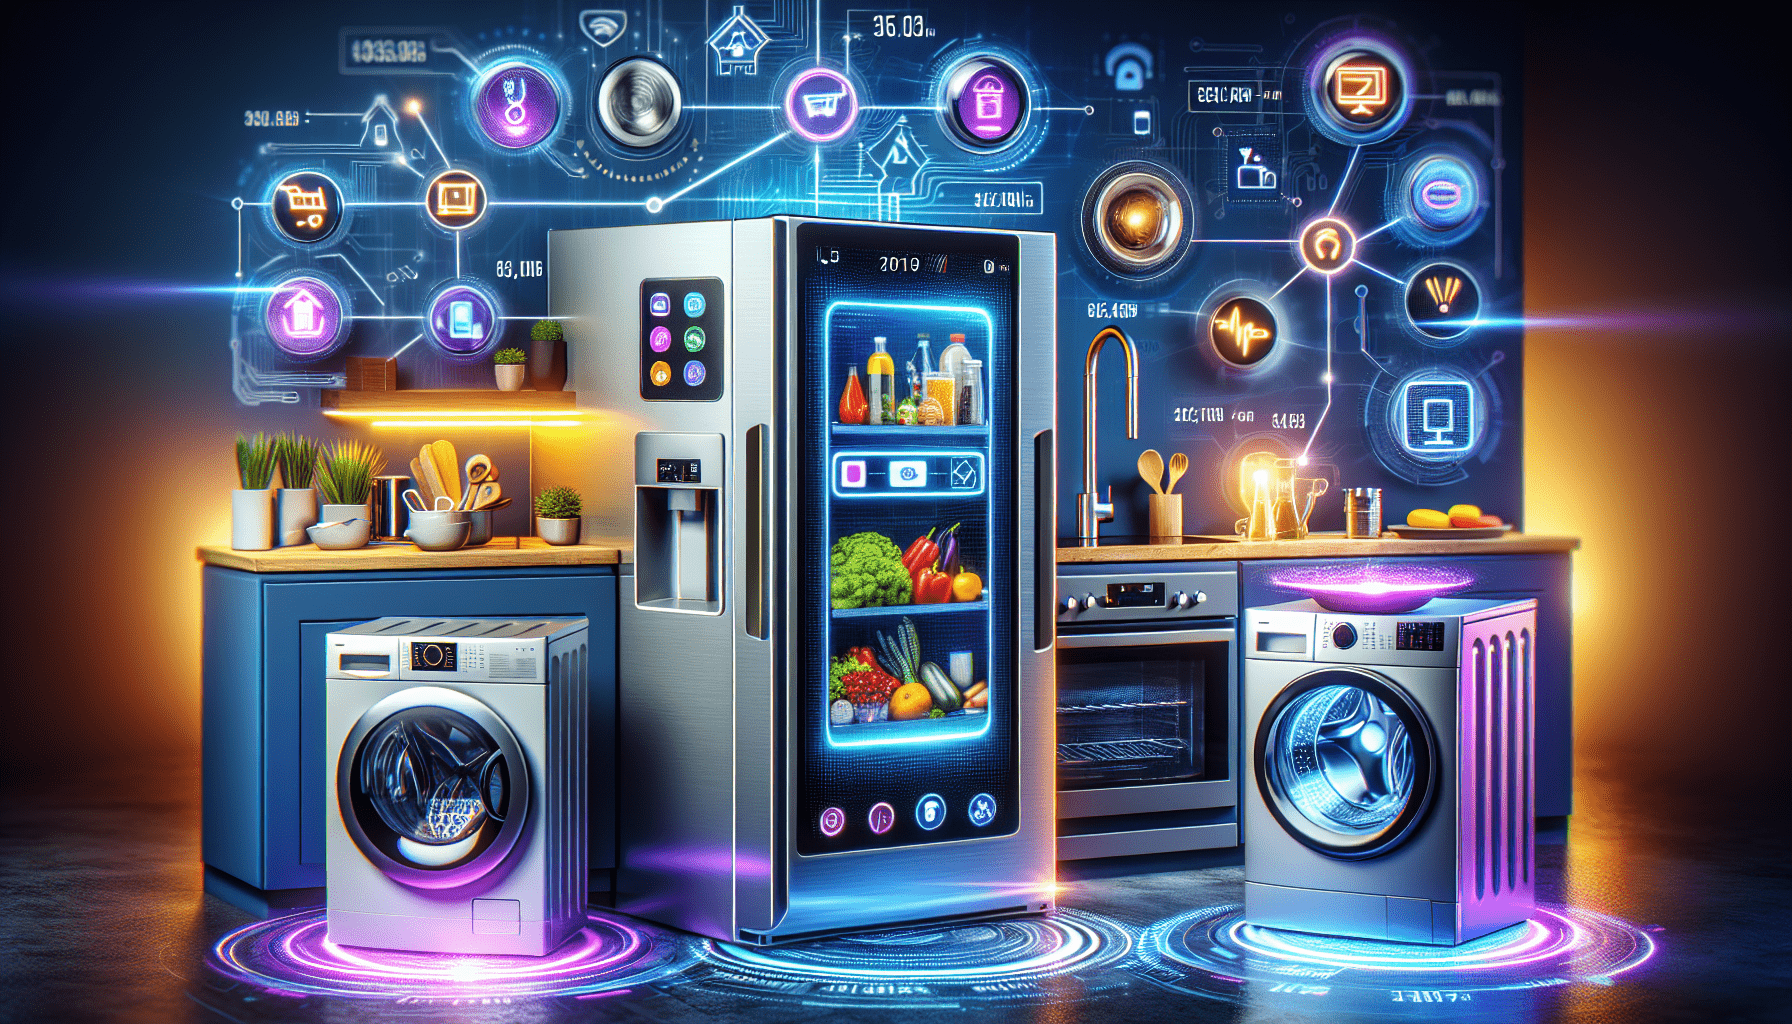 How Do Smart Appliances Work?